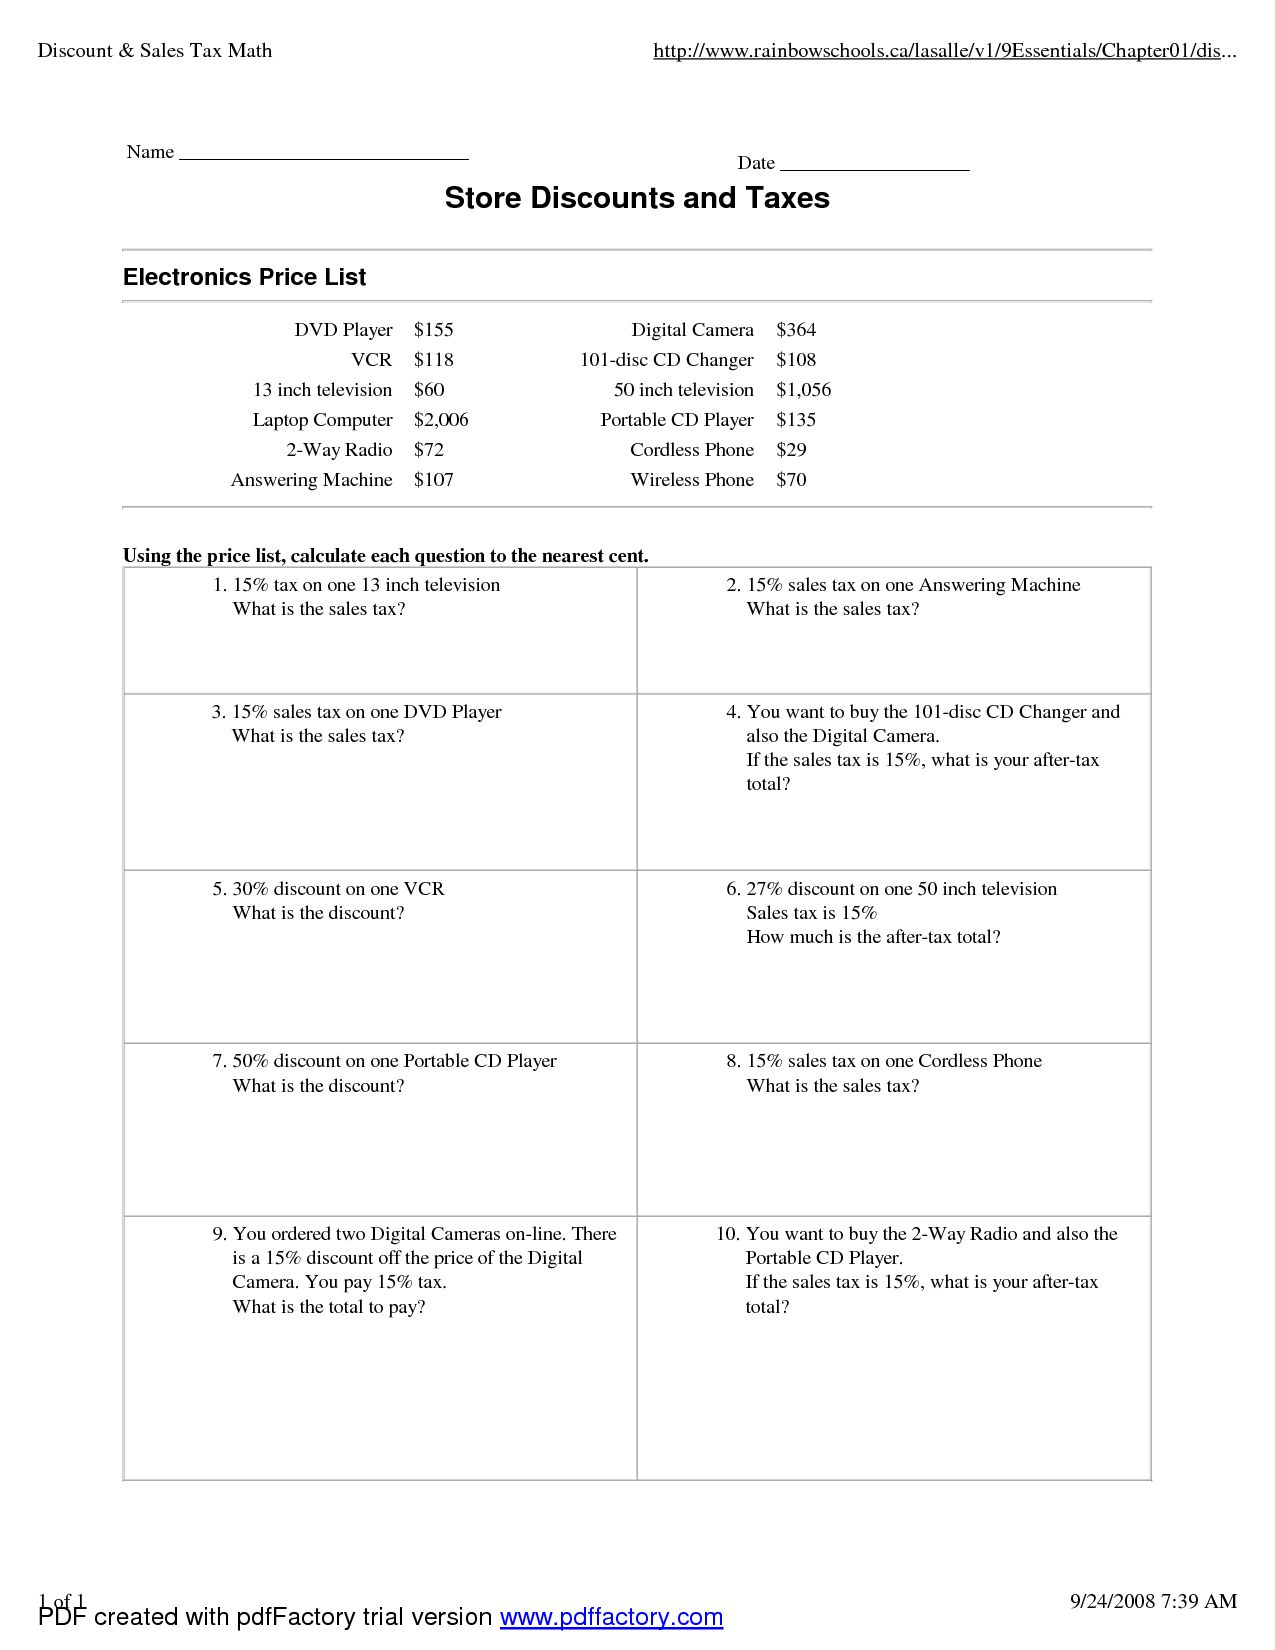 money-math-solve-sales-tax-word-problems-worksheets-99worksheets